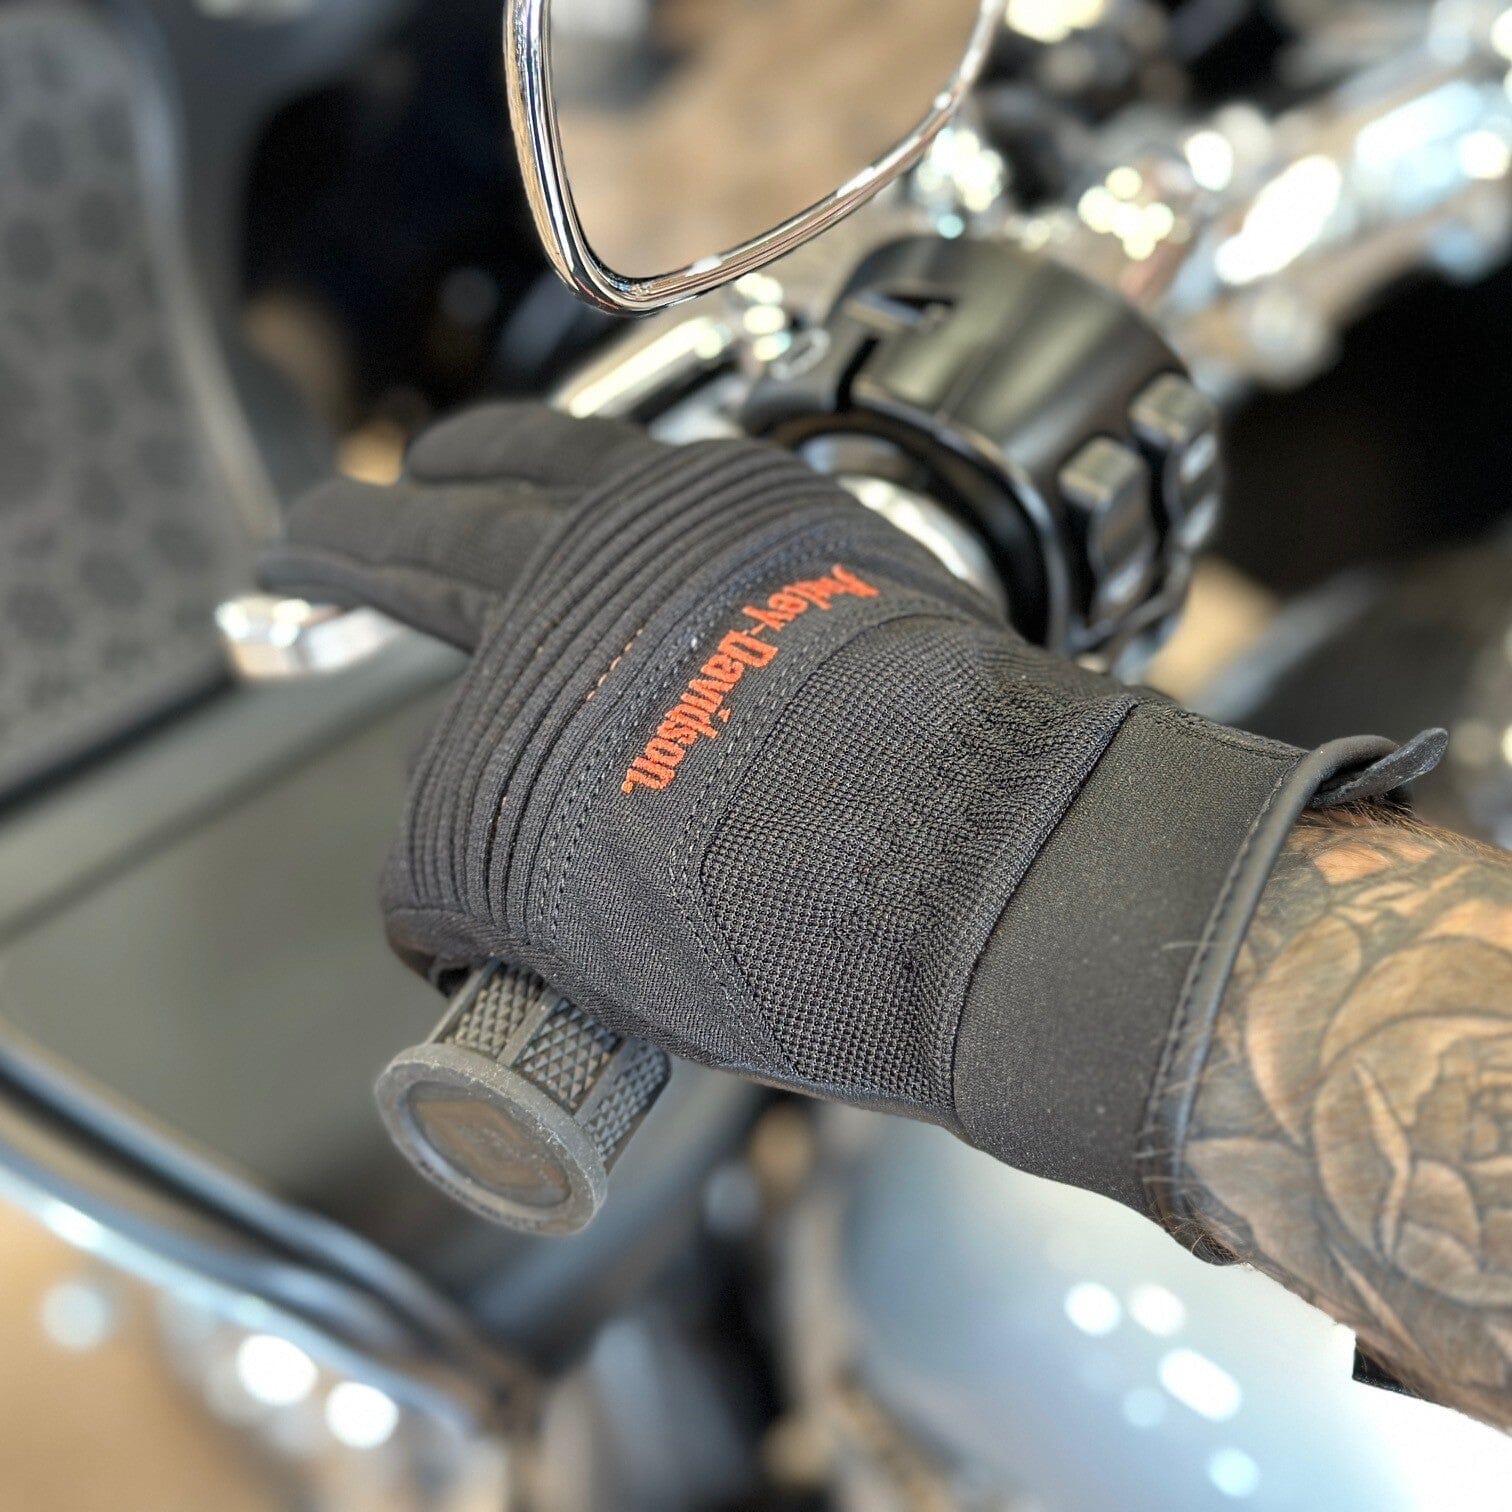 Harley-Davidson Men's Ovation Mixed Media Gloves, Black - 97136-23VM